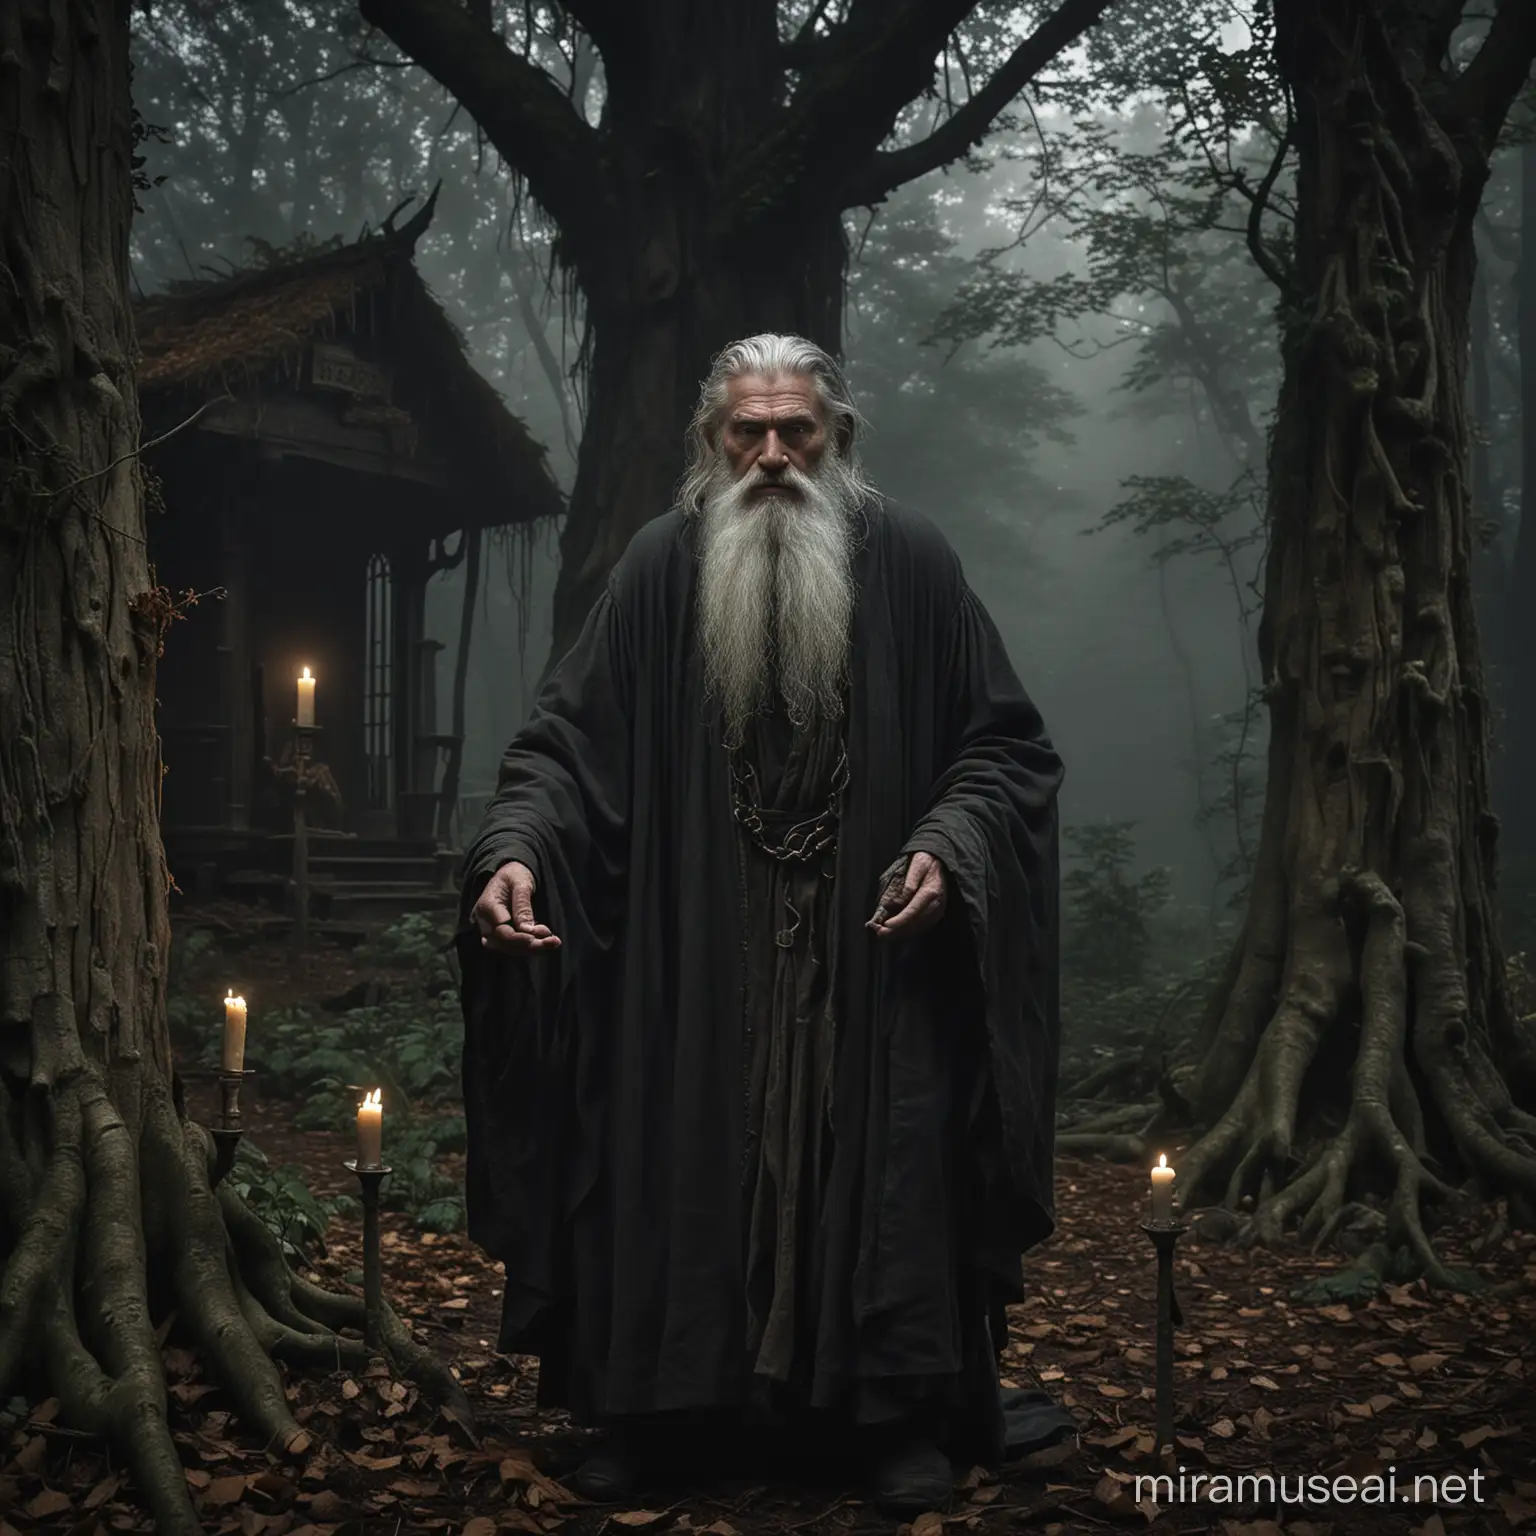 Enigmatic Forest Wizard in Shadowy Dwelling